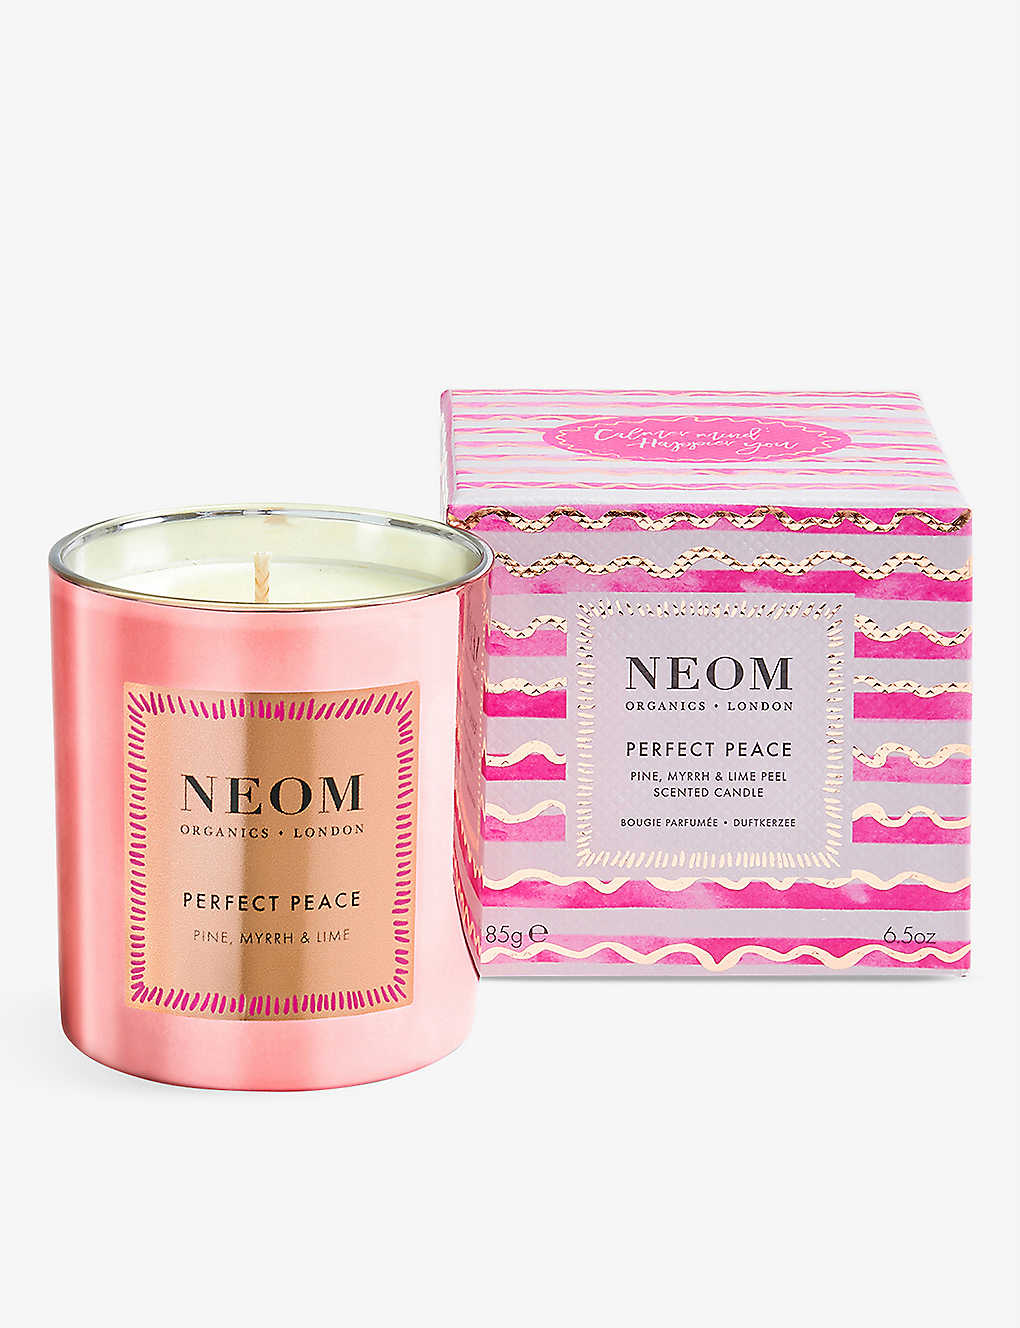 NEOM パーフェクト ピース センテッドキャンドル 20cm Peace? 【名入れ無料】 新製品情報も満載 Perfect candle scented